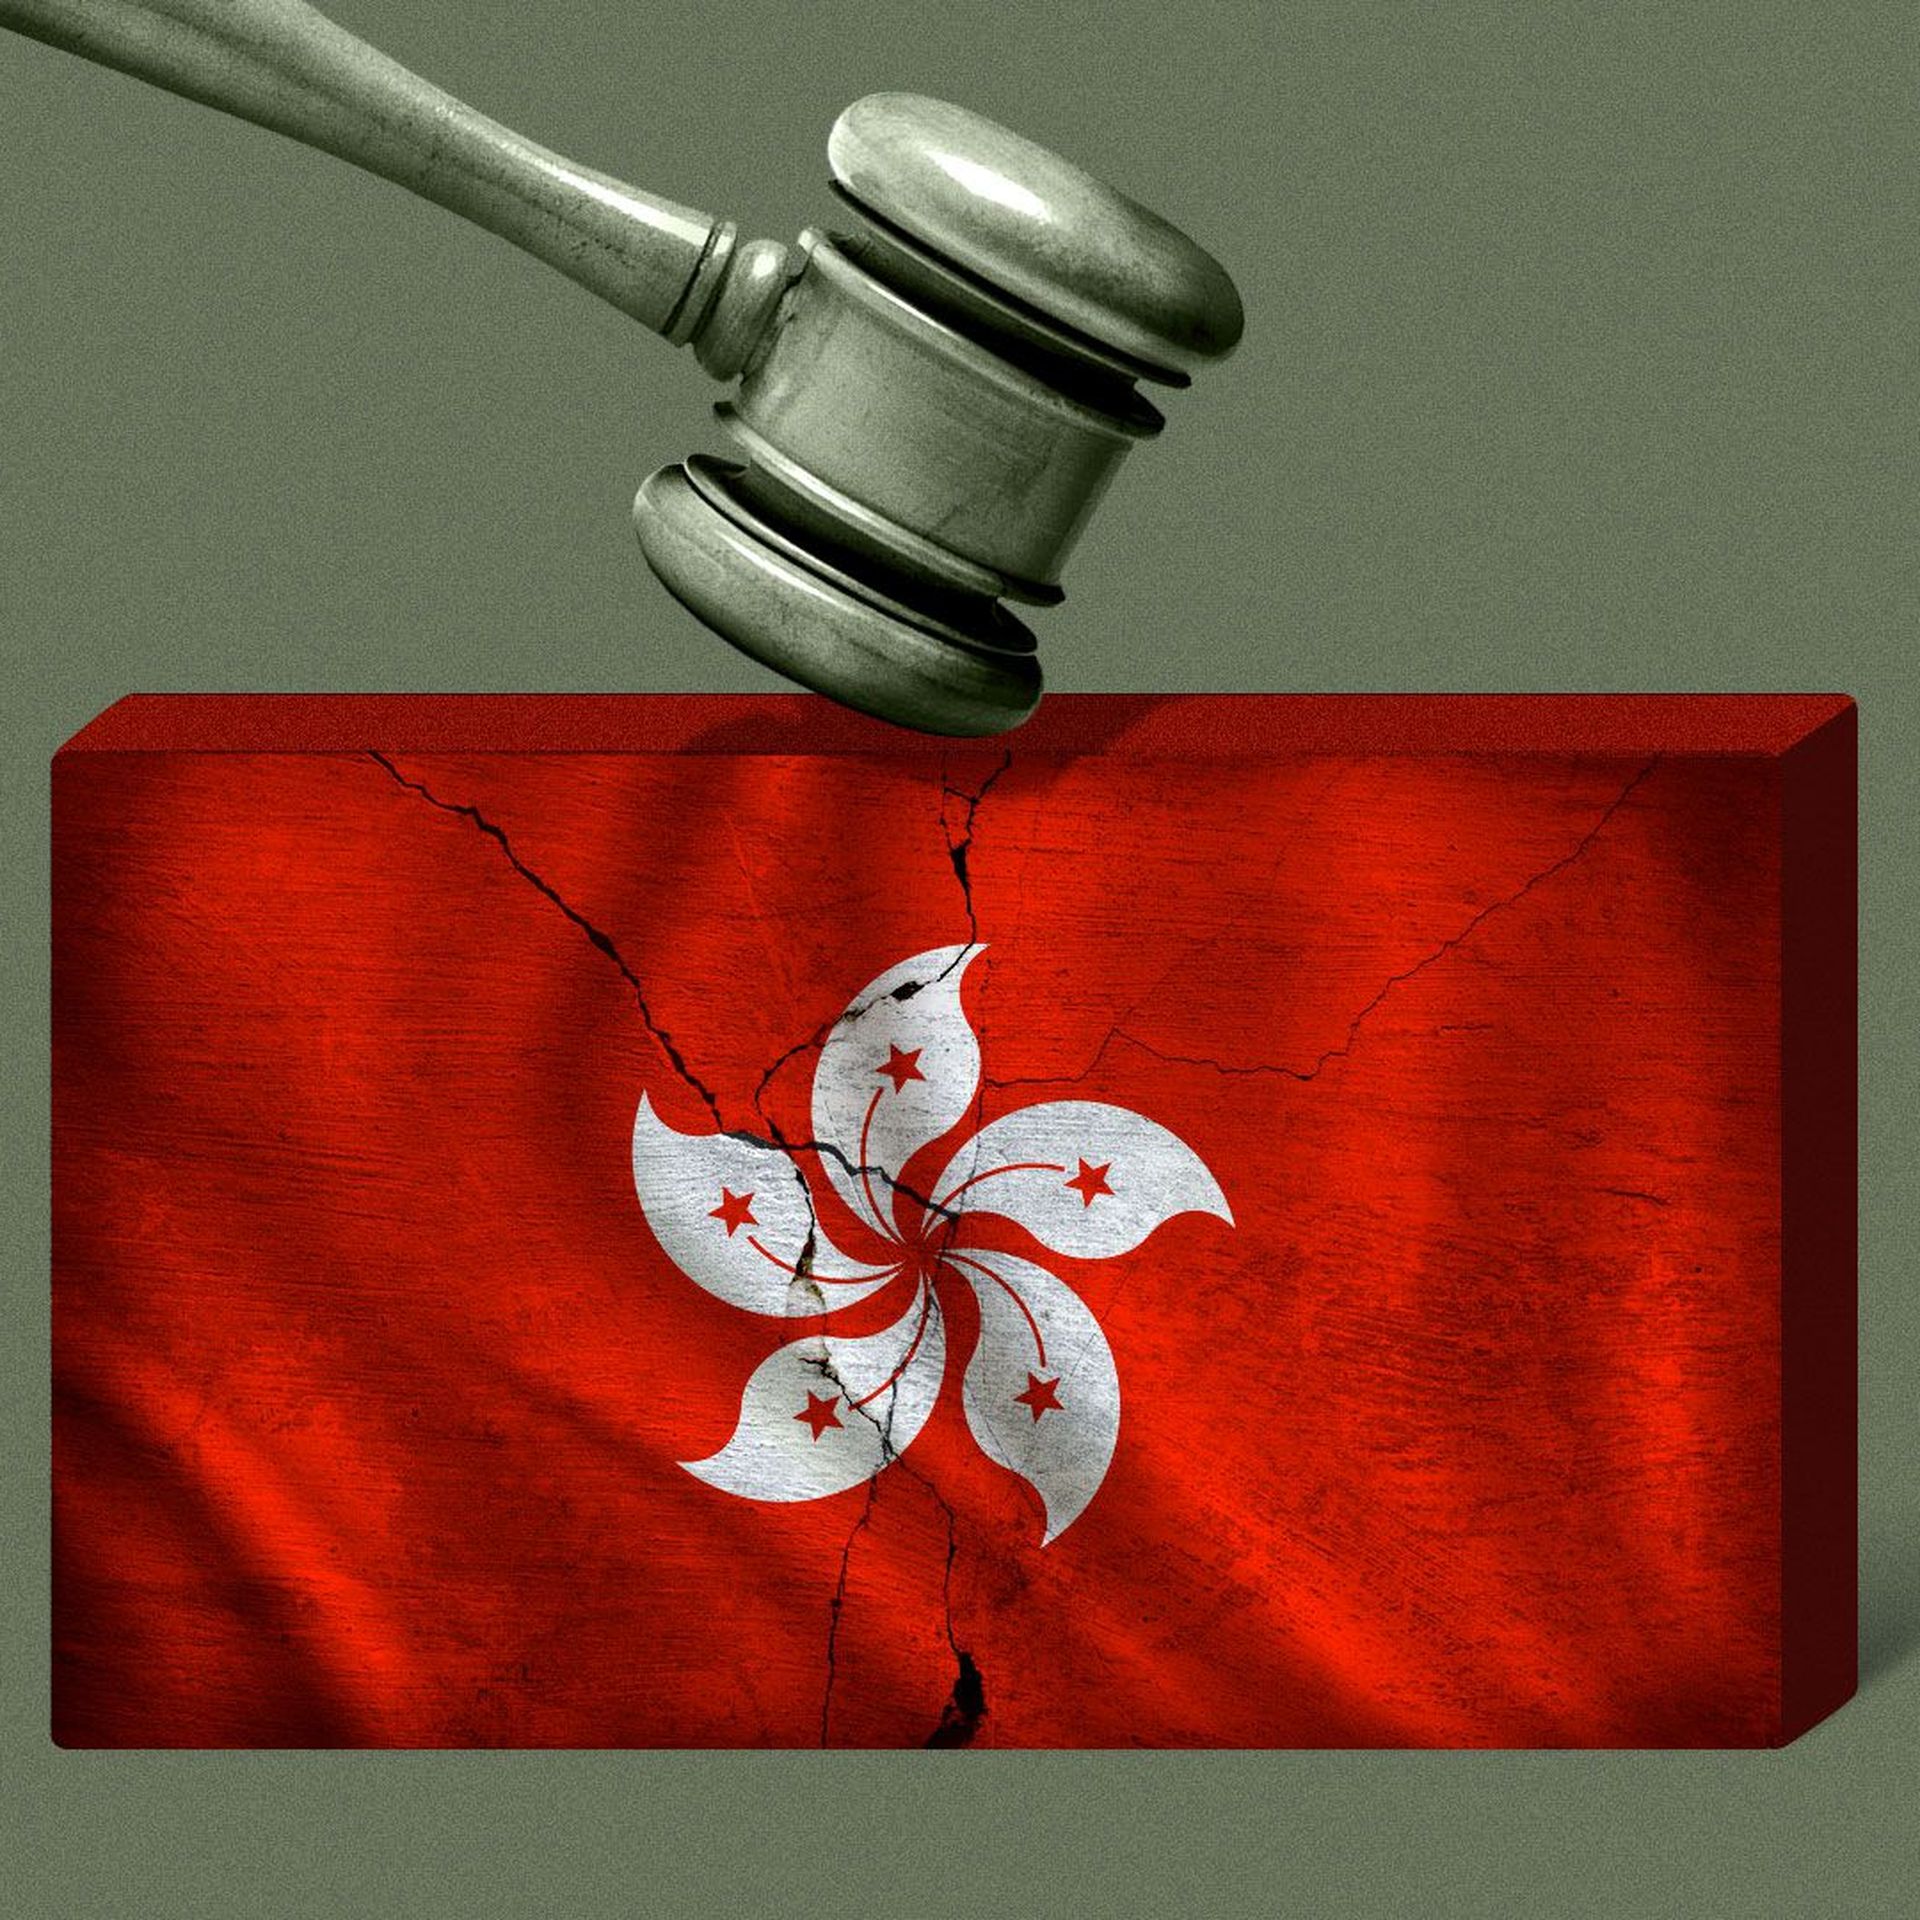 Illustration of a gavel cracking the Hong Kong flag